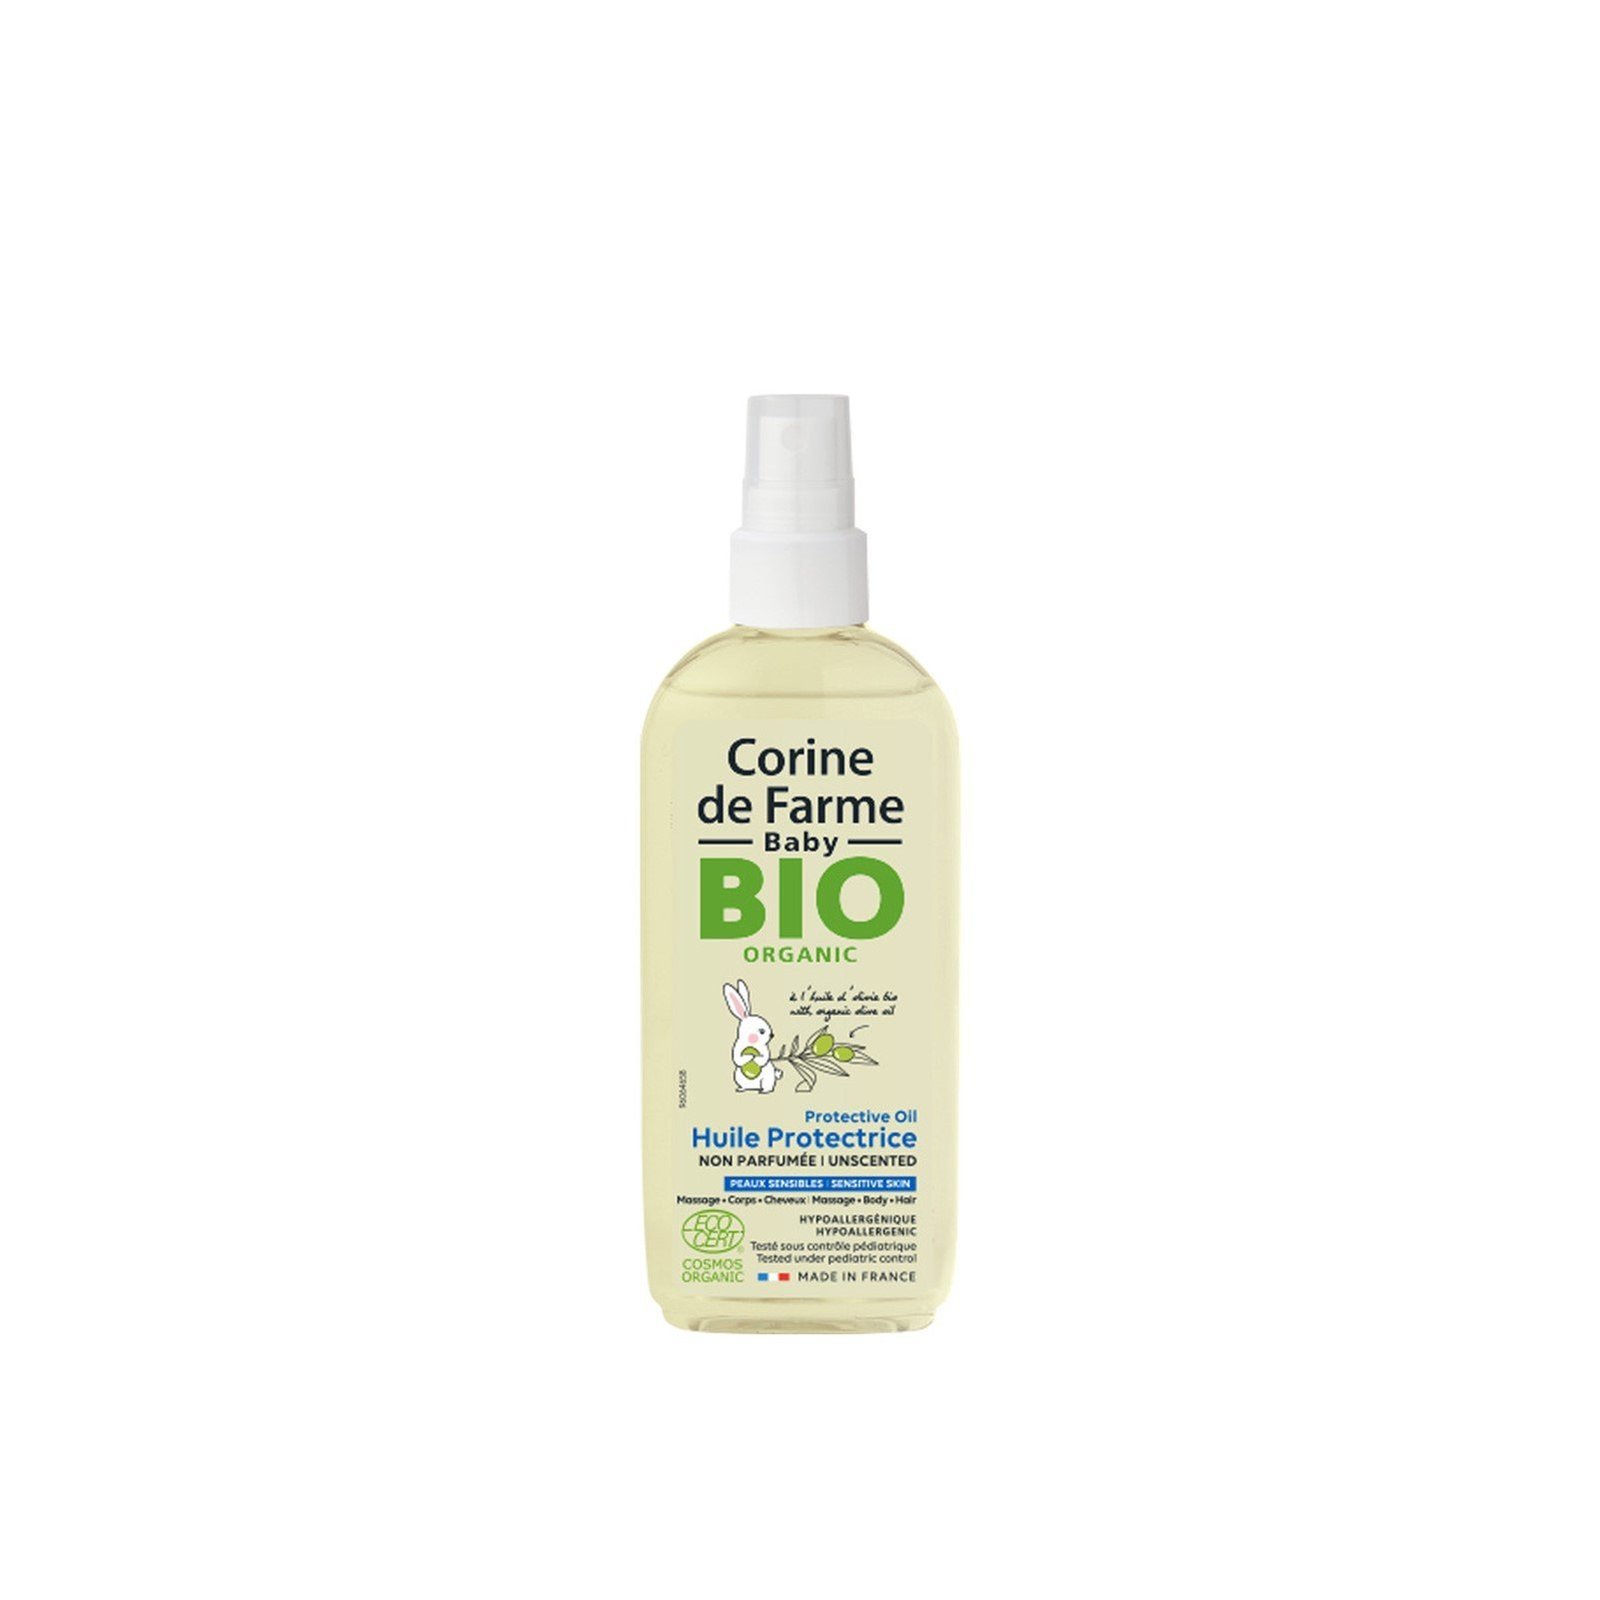 Corine de Farme Baby Bio Organic Protective Oil 100ml (3.38floz)